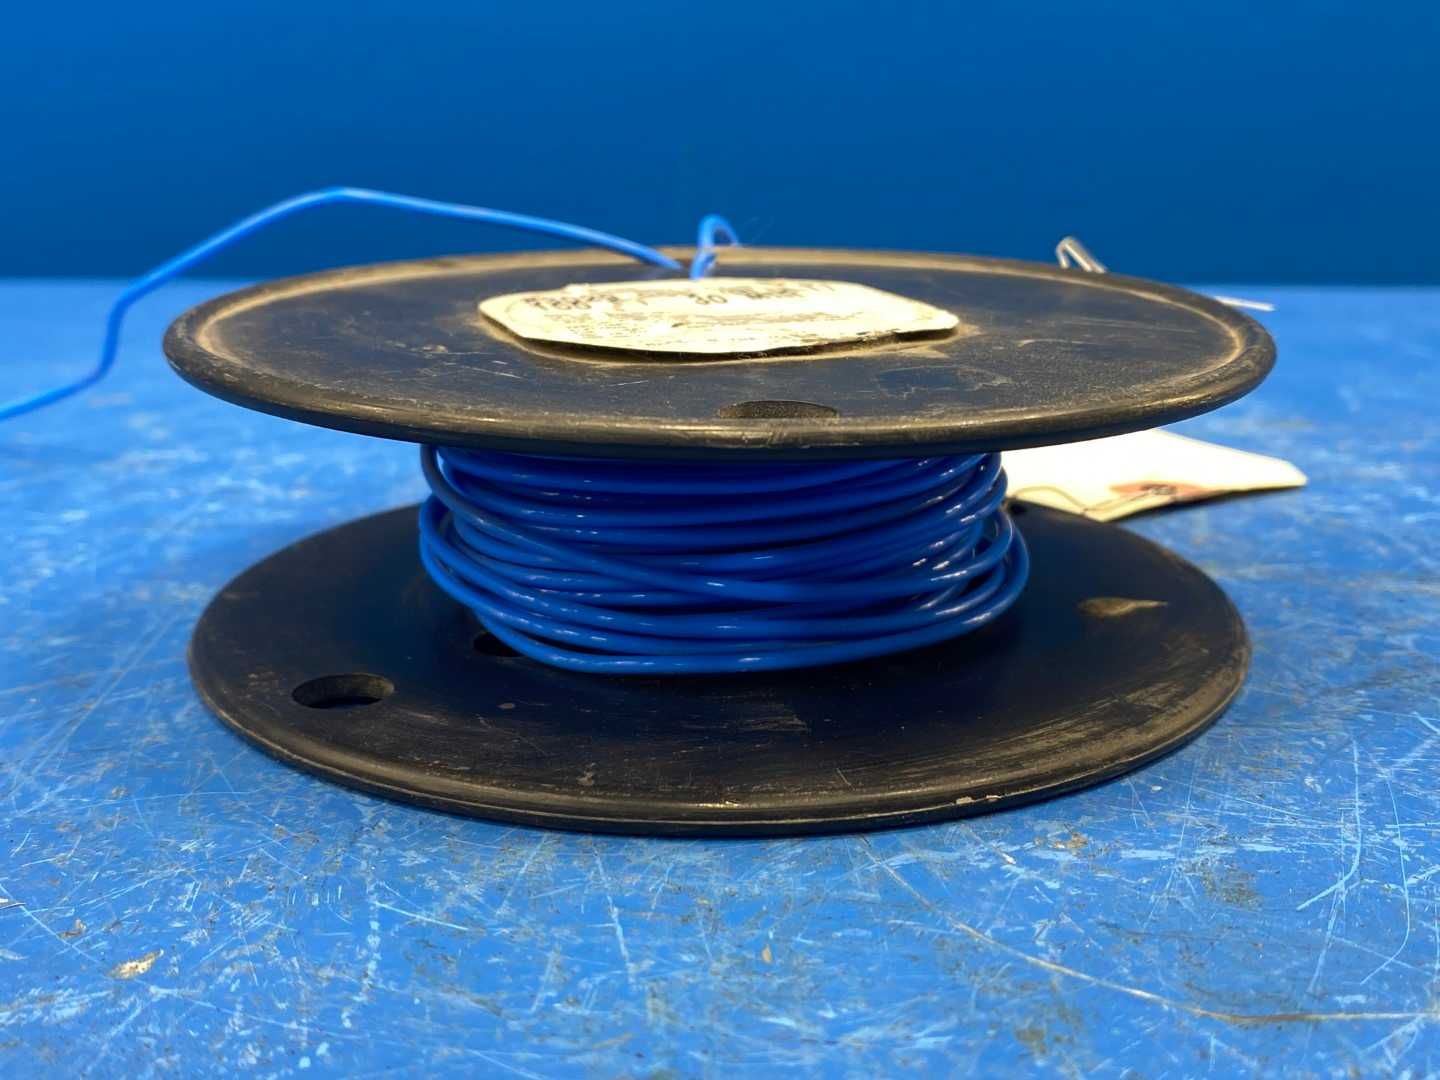 Belden Electronics. 18 Awg Blue Copper Wire Type MTR 50FT